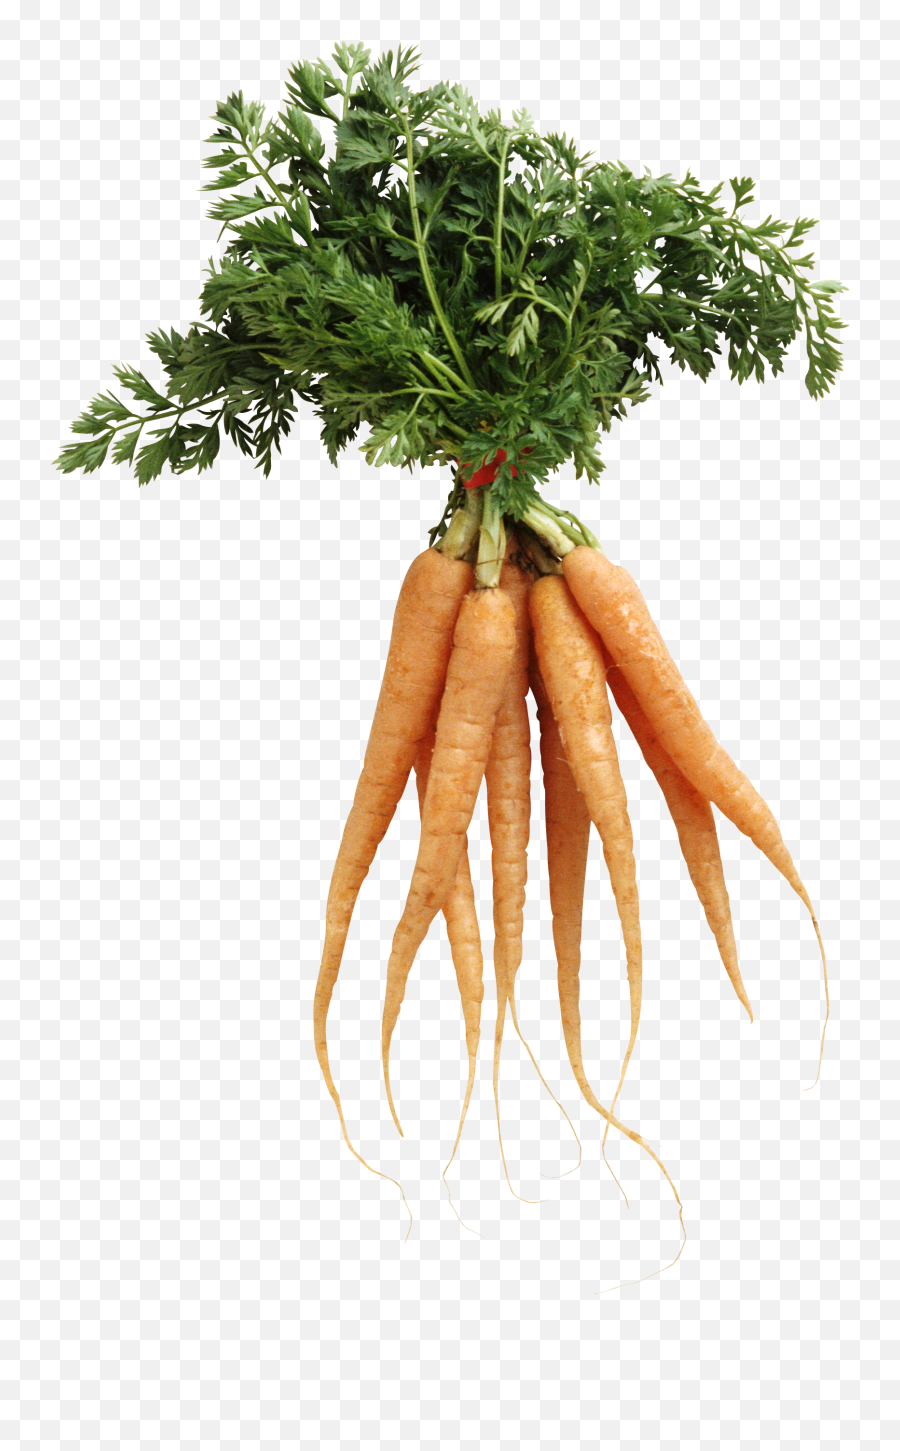 Carrot Png Image - Transparent Background Carrots Transparent,Carrot Transparent Background